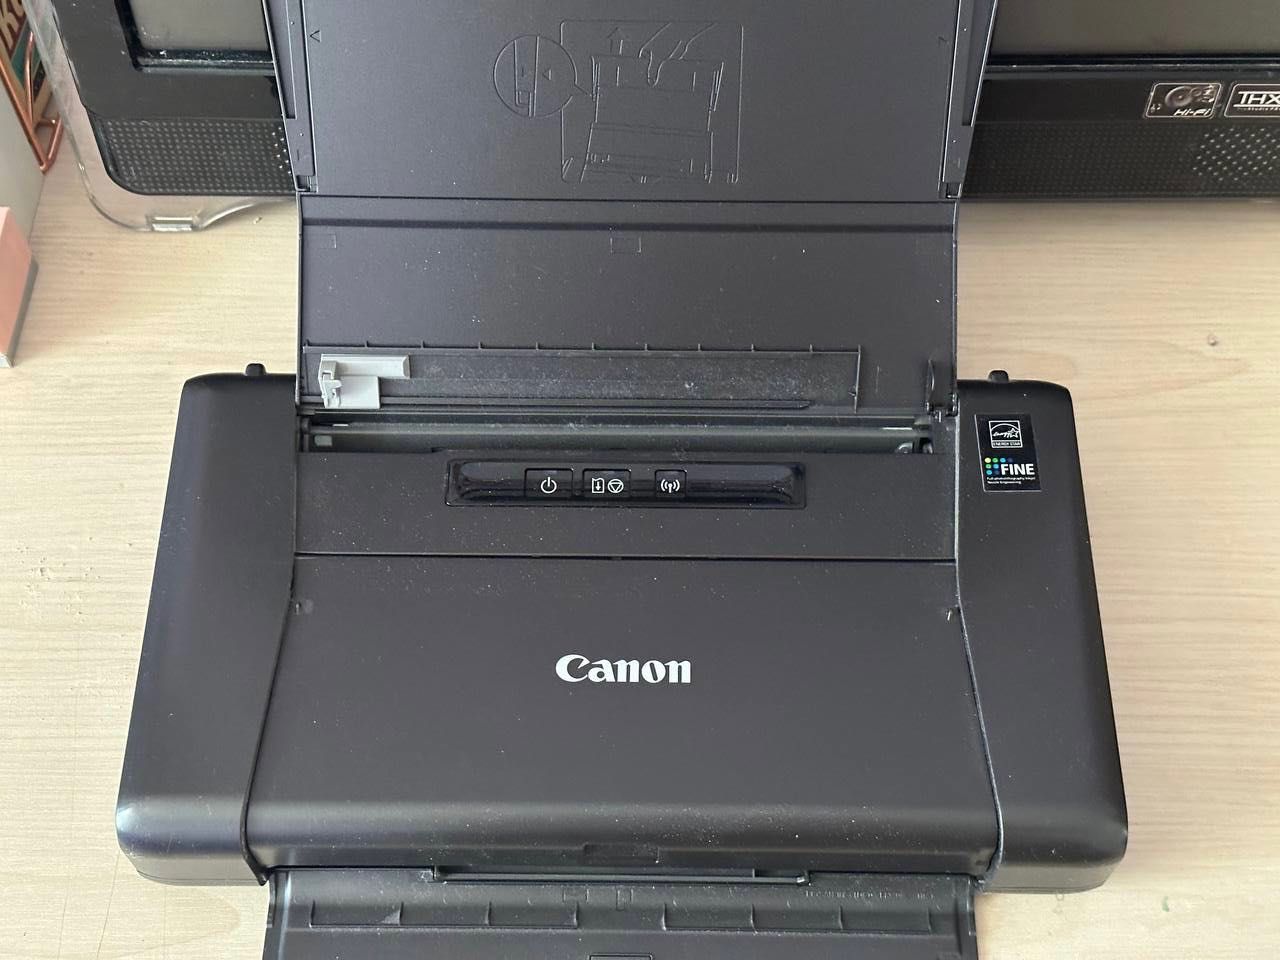 Canon цветной принтер IP 110